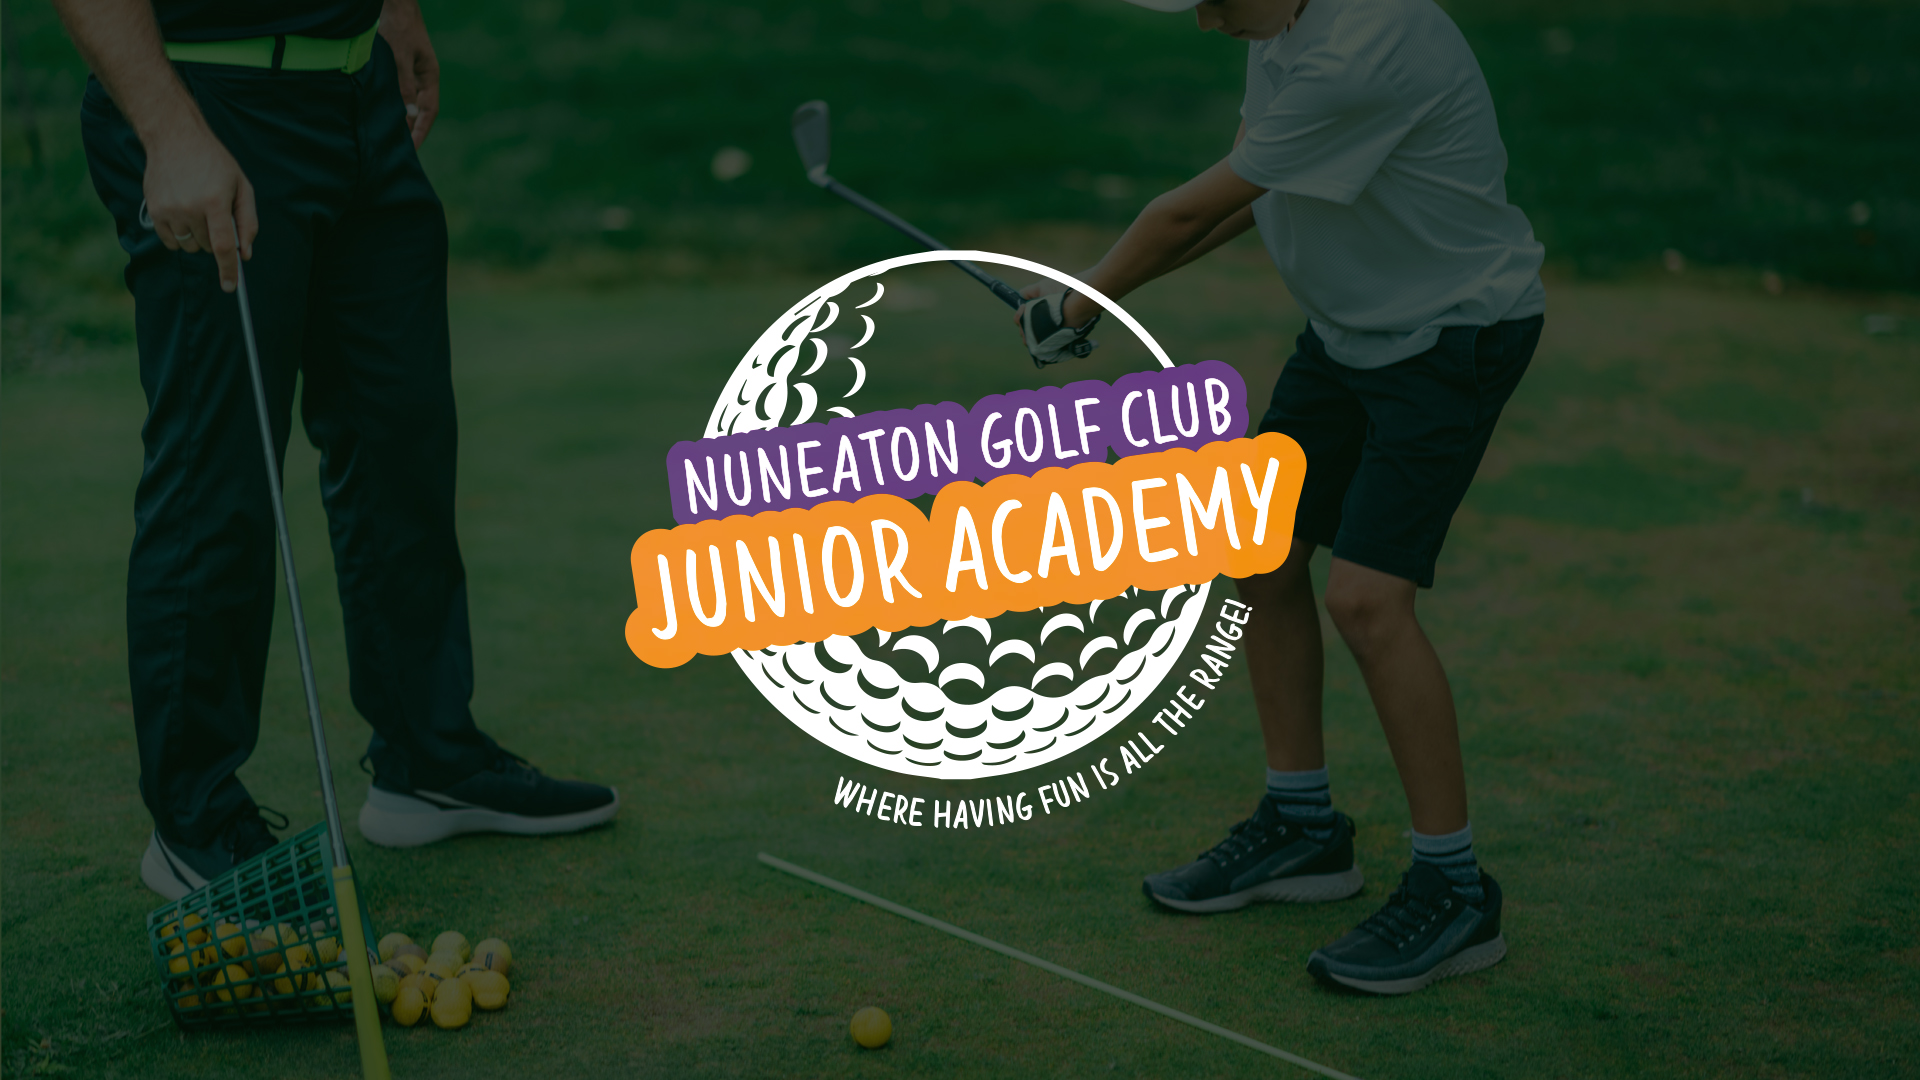 Nuneaton Golf Club Junior Academy